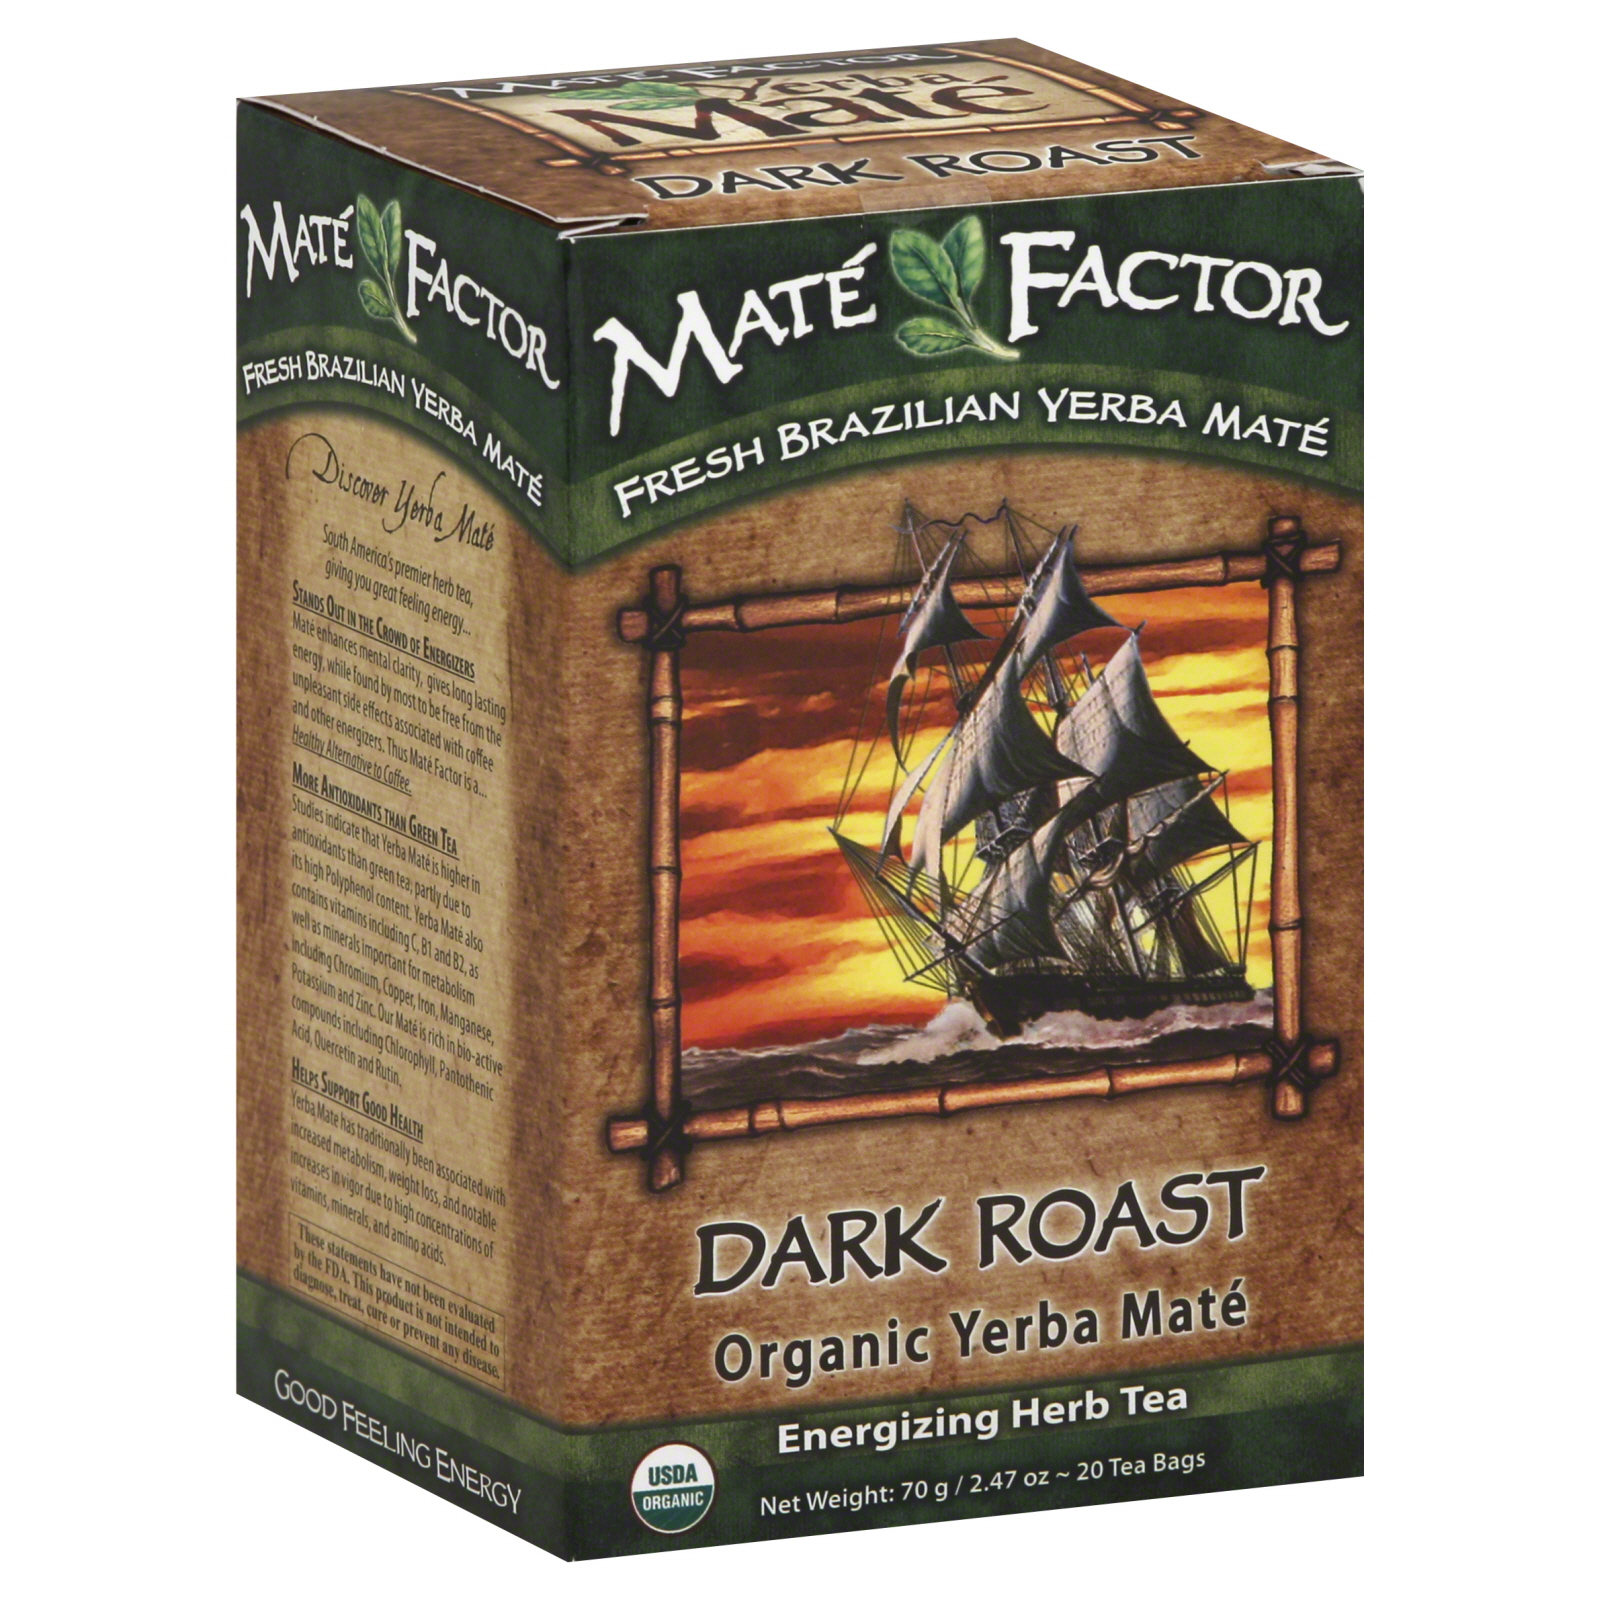 Mate Factor Dark Roast Organic Yerba Mate, 20 bag